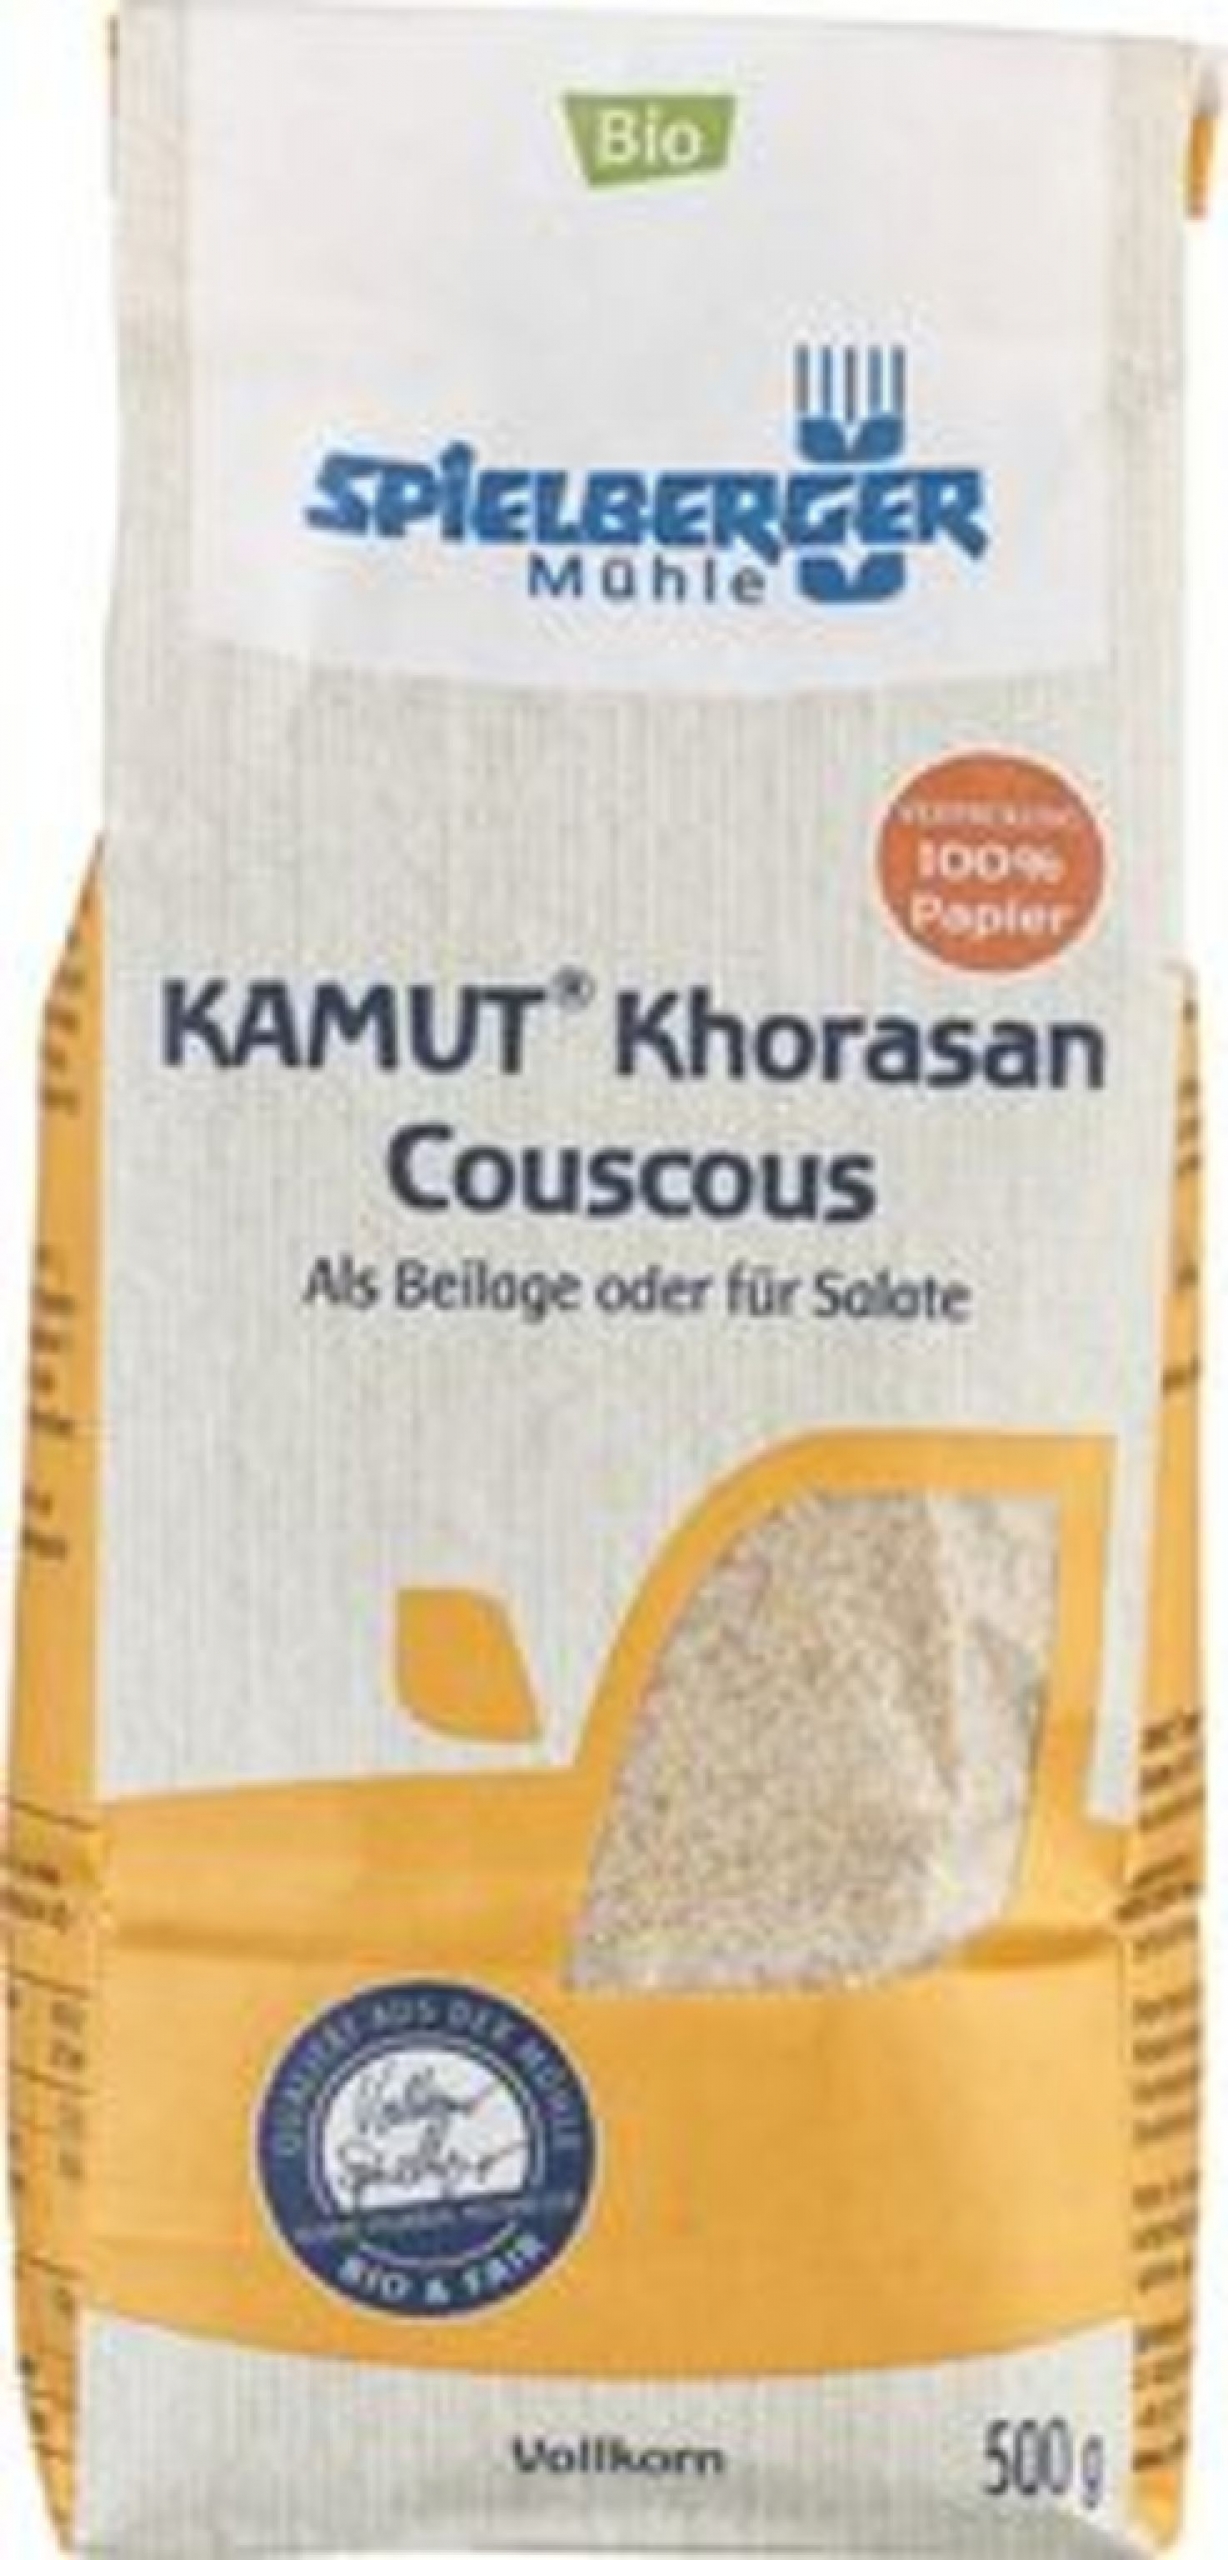 Bio Kamut-Khorasan Couscous 500g